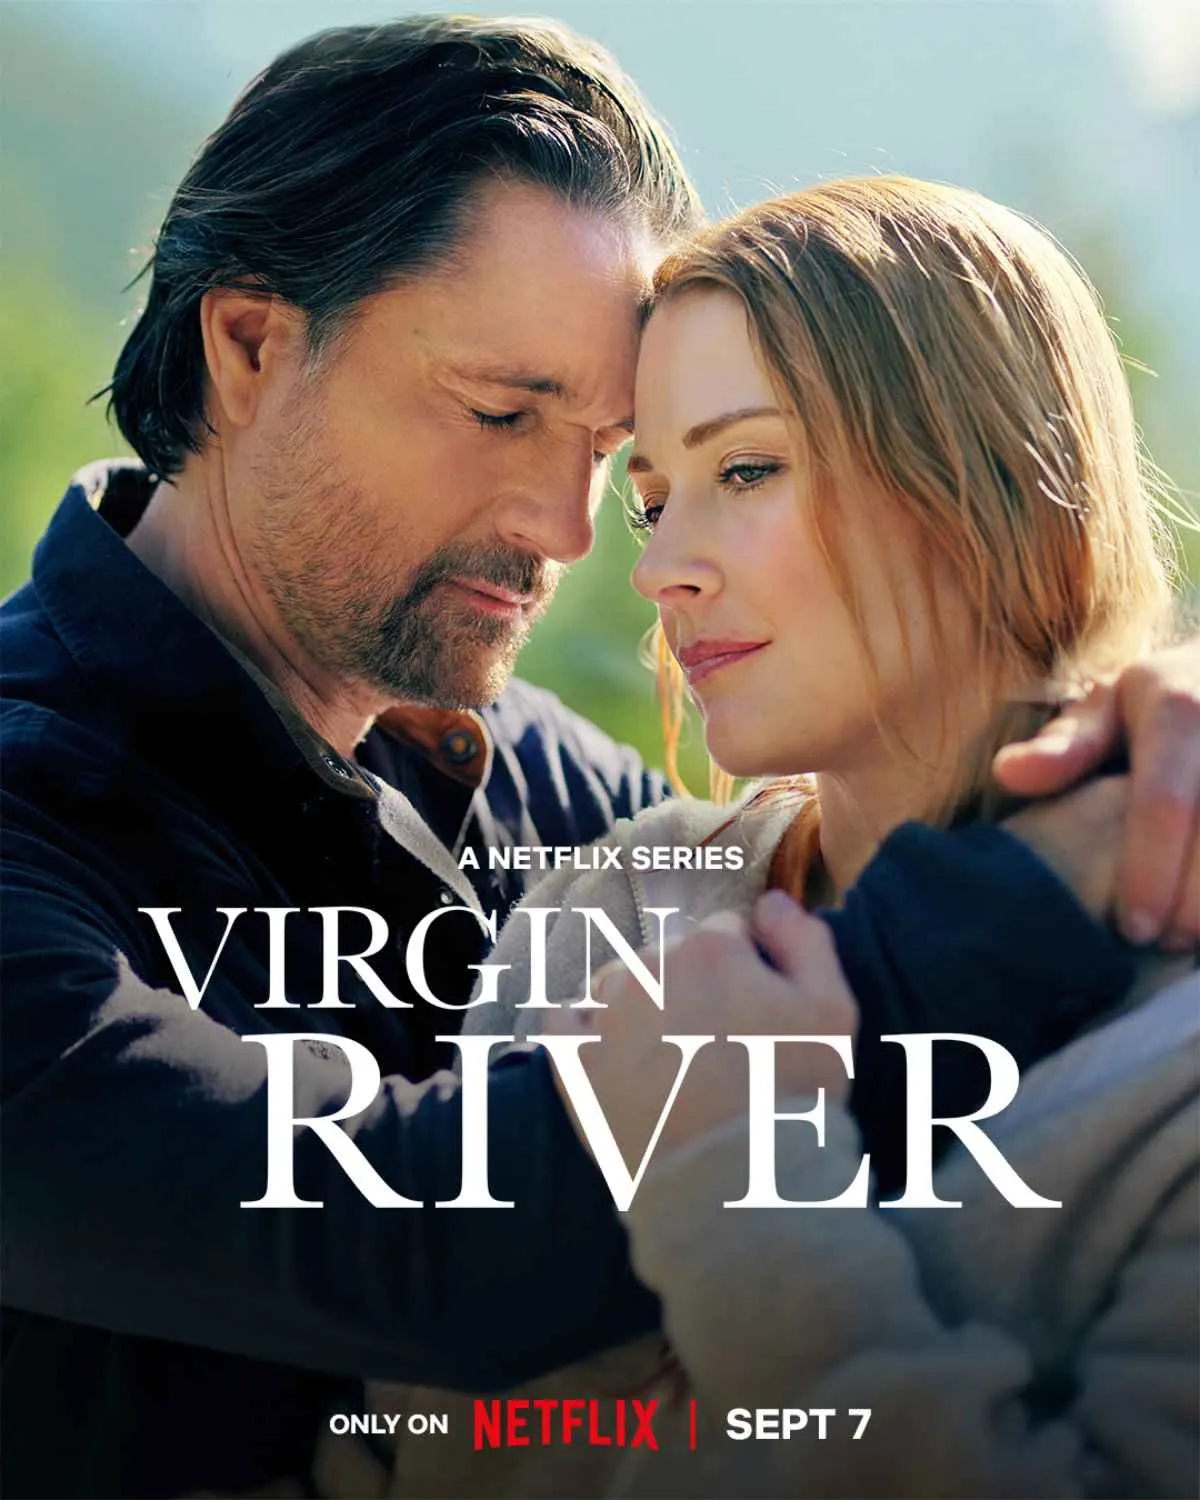 Virgin River Season 5 Part 1 Trailer and Details